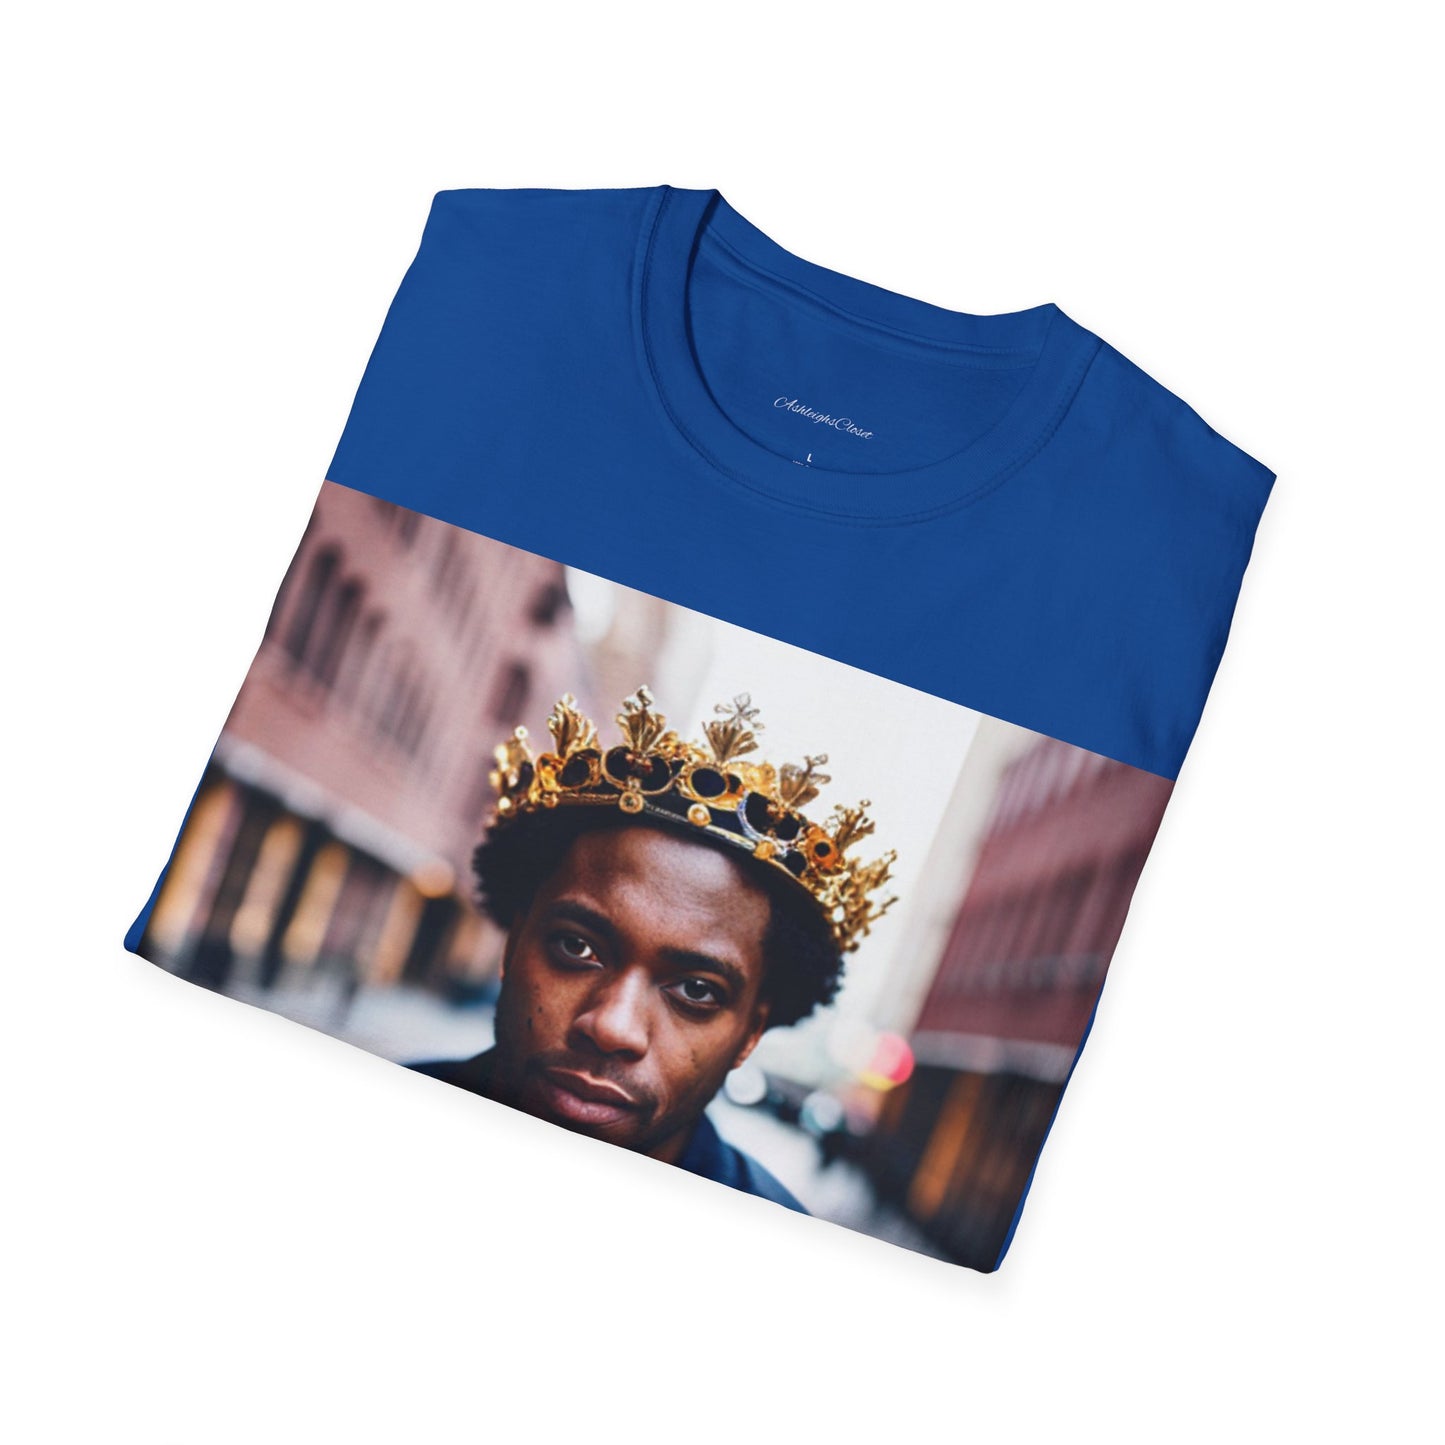 Birthday King T-Shirt by AshleighsCloset